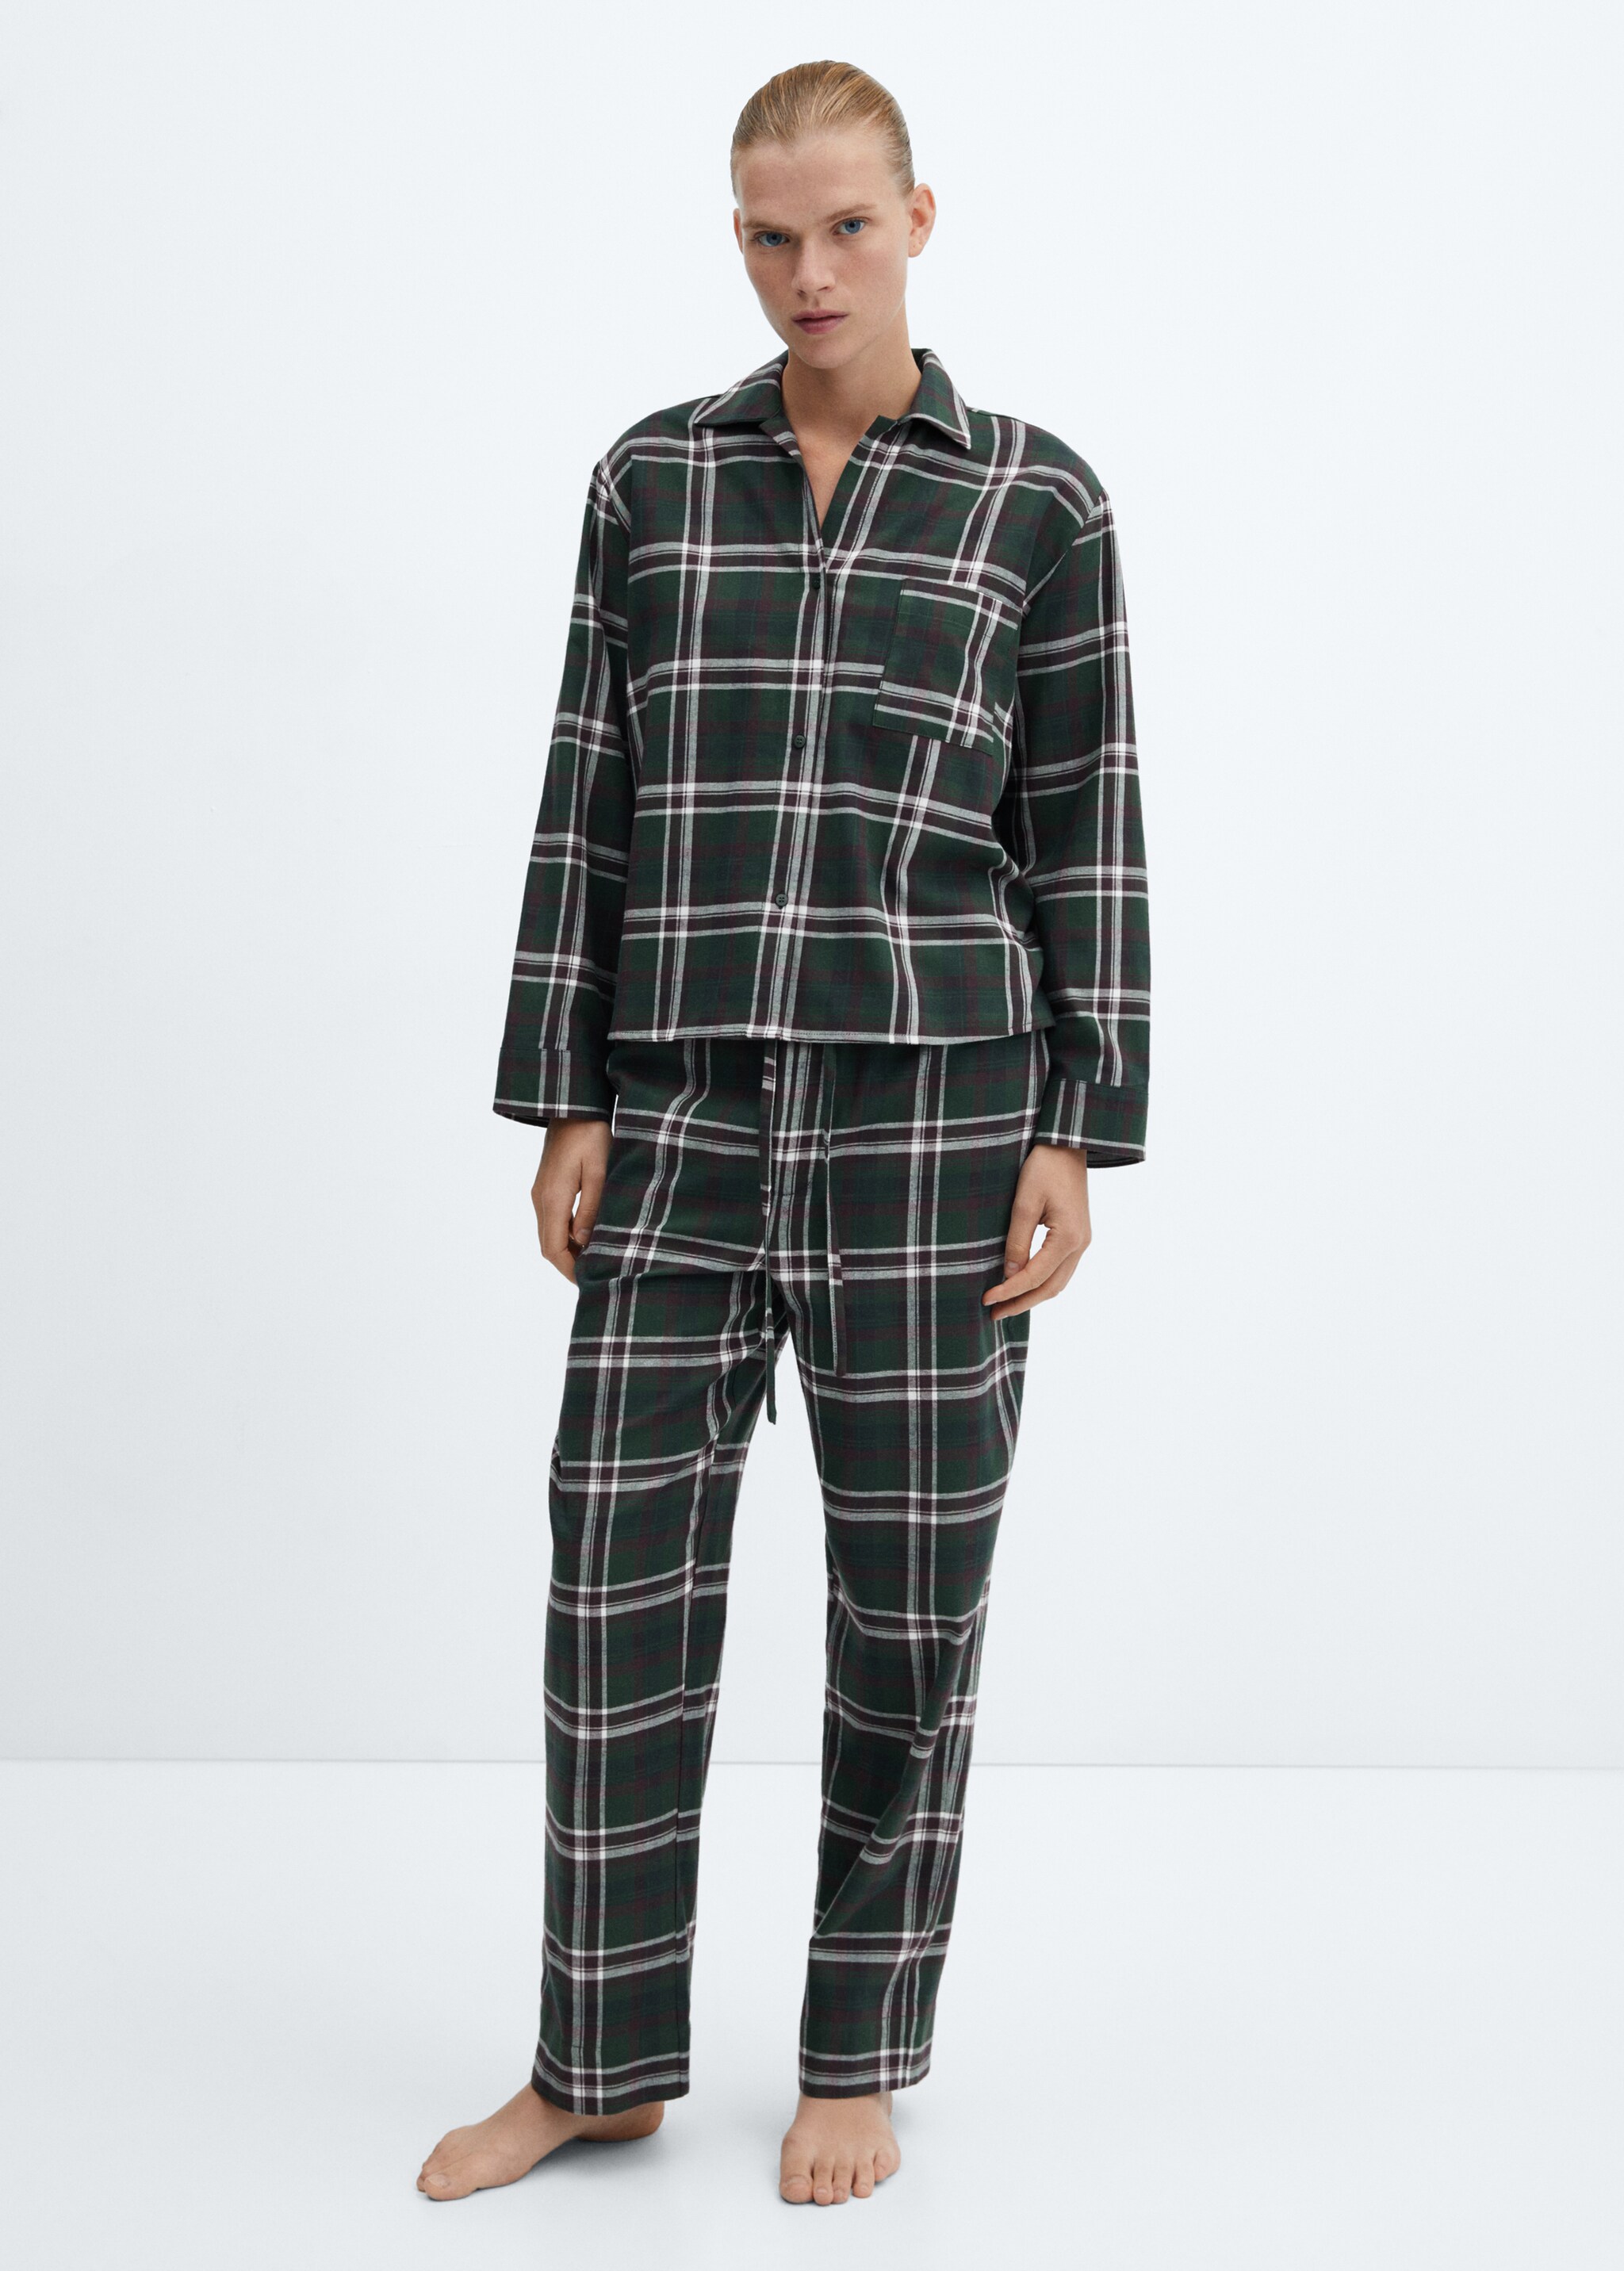 Camisa pijama algodón franela - Plano general